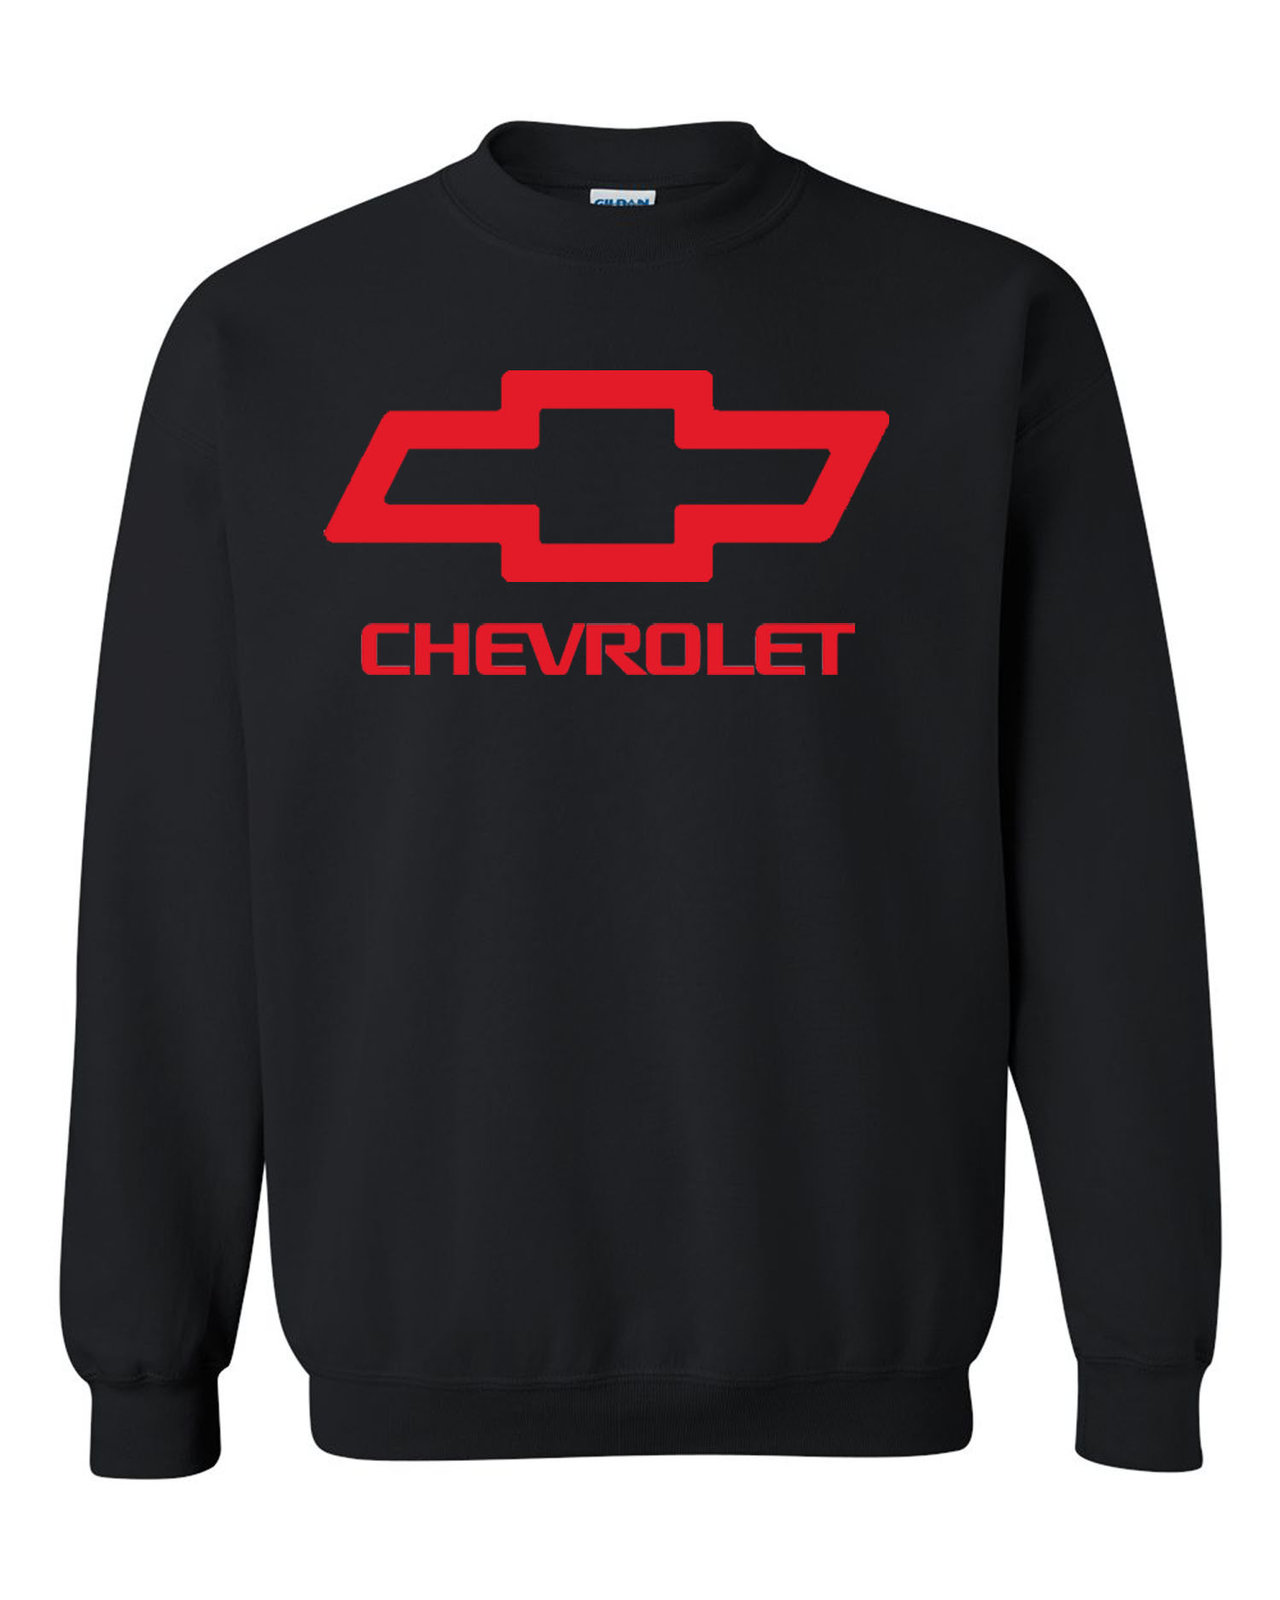 Red Big Chevy Sweatshirt Chevrolet Unisex Black Crewneck Sweatshirt Tee